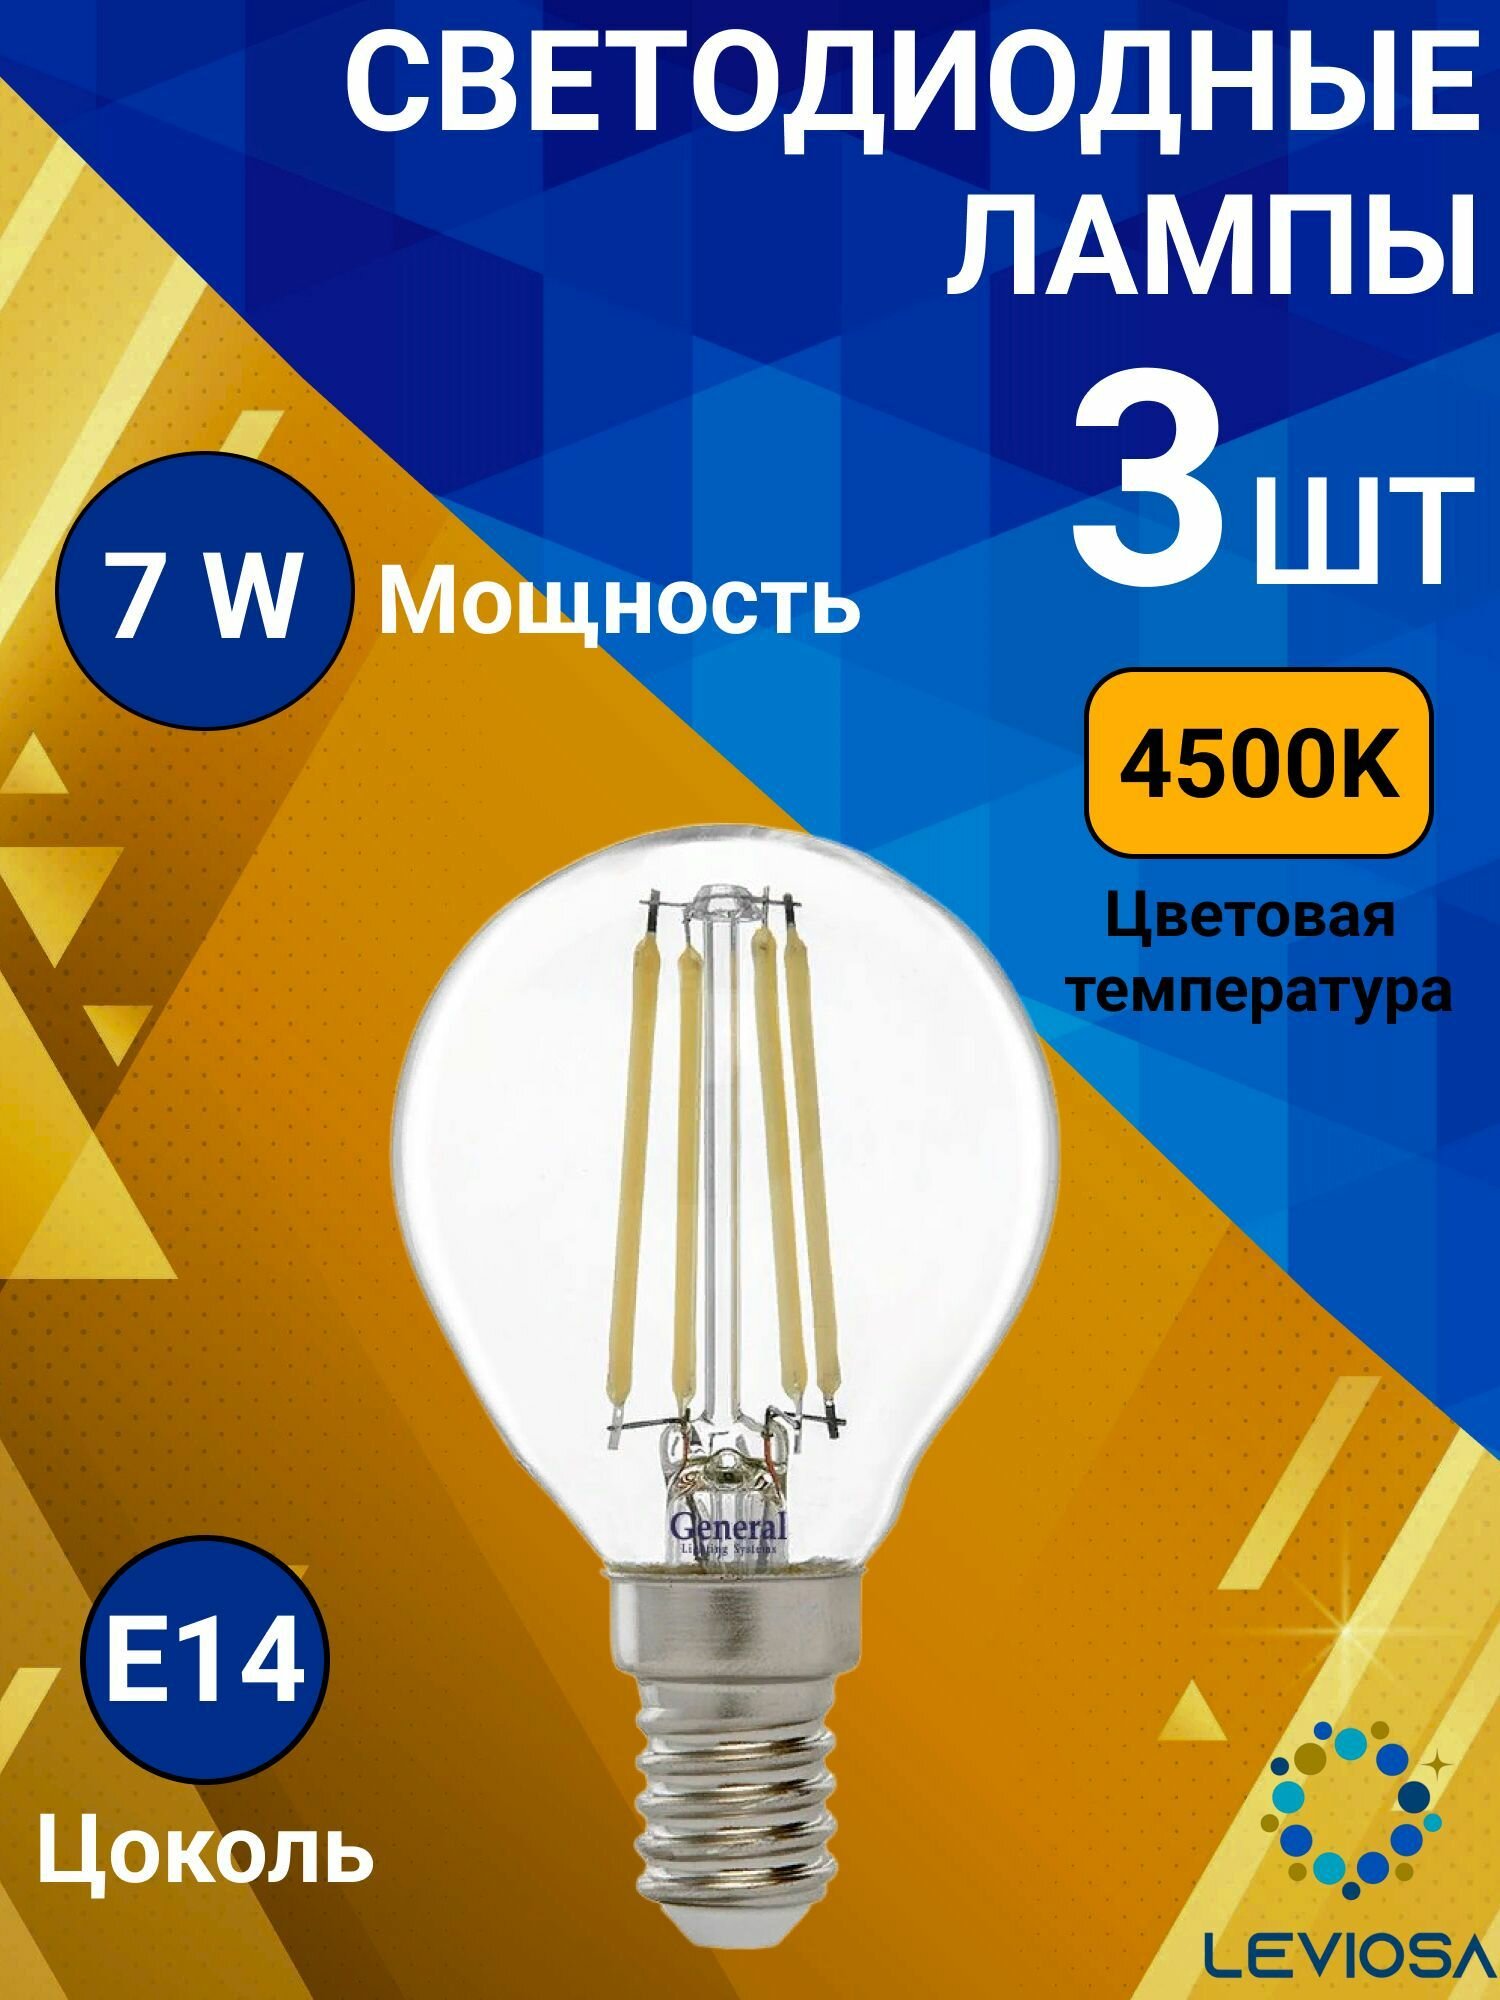 General, Лампа светодиодная филаментная, Комплект из 3 шт, 7 Вт, Цоколь E14, 4500К, Форма лампы Шар